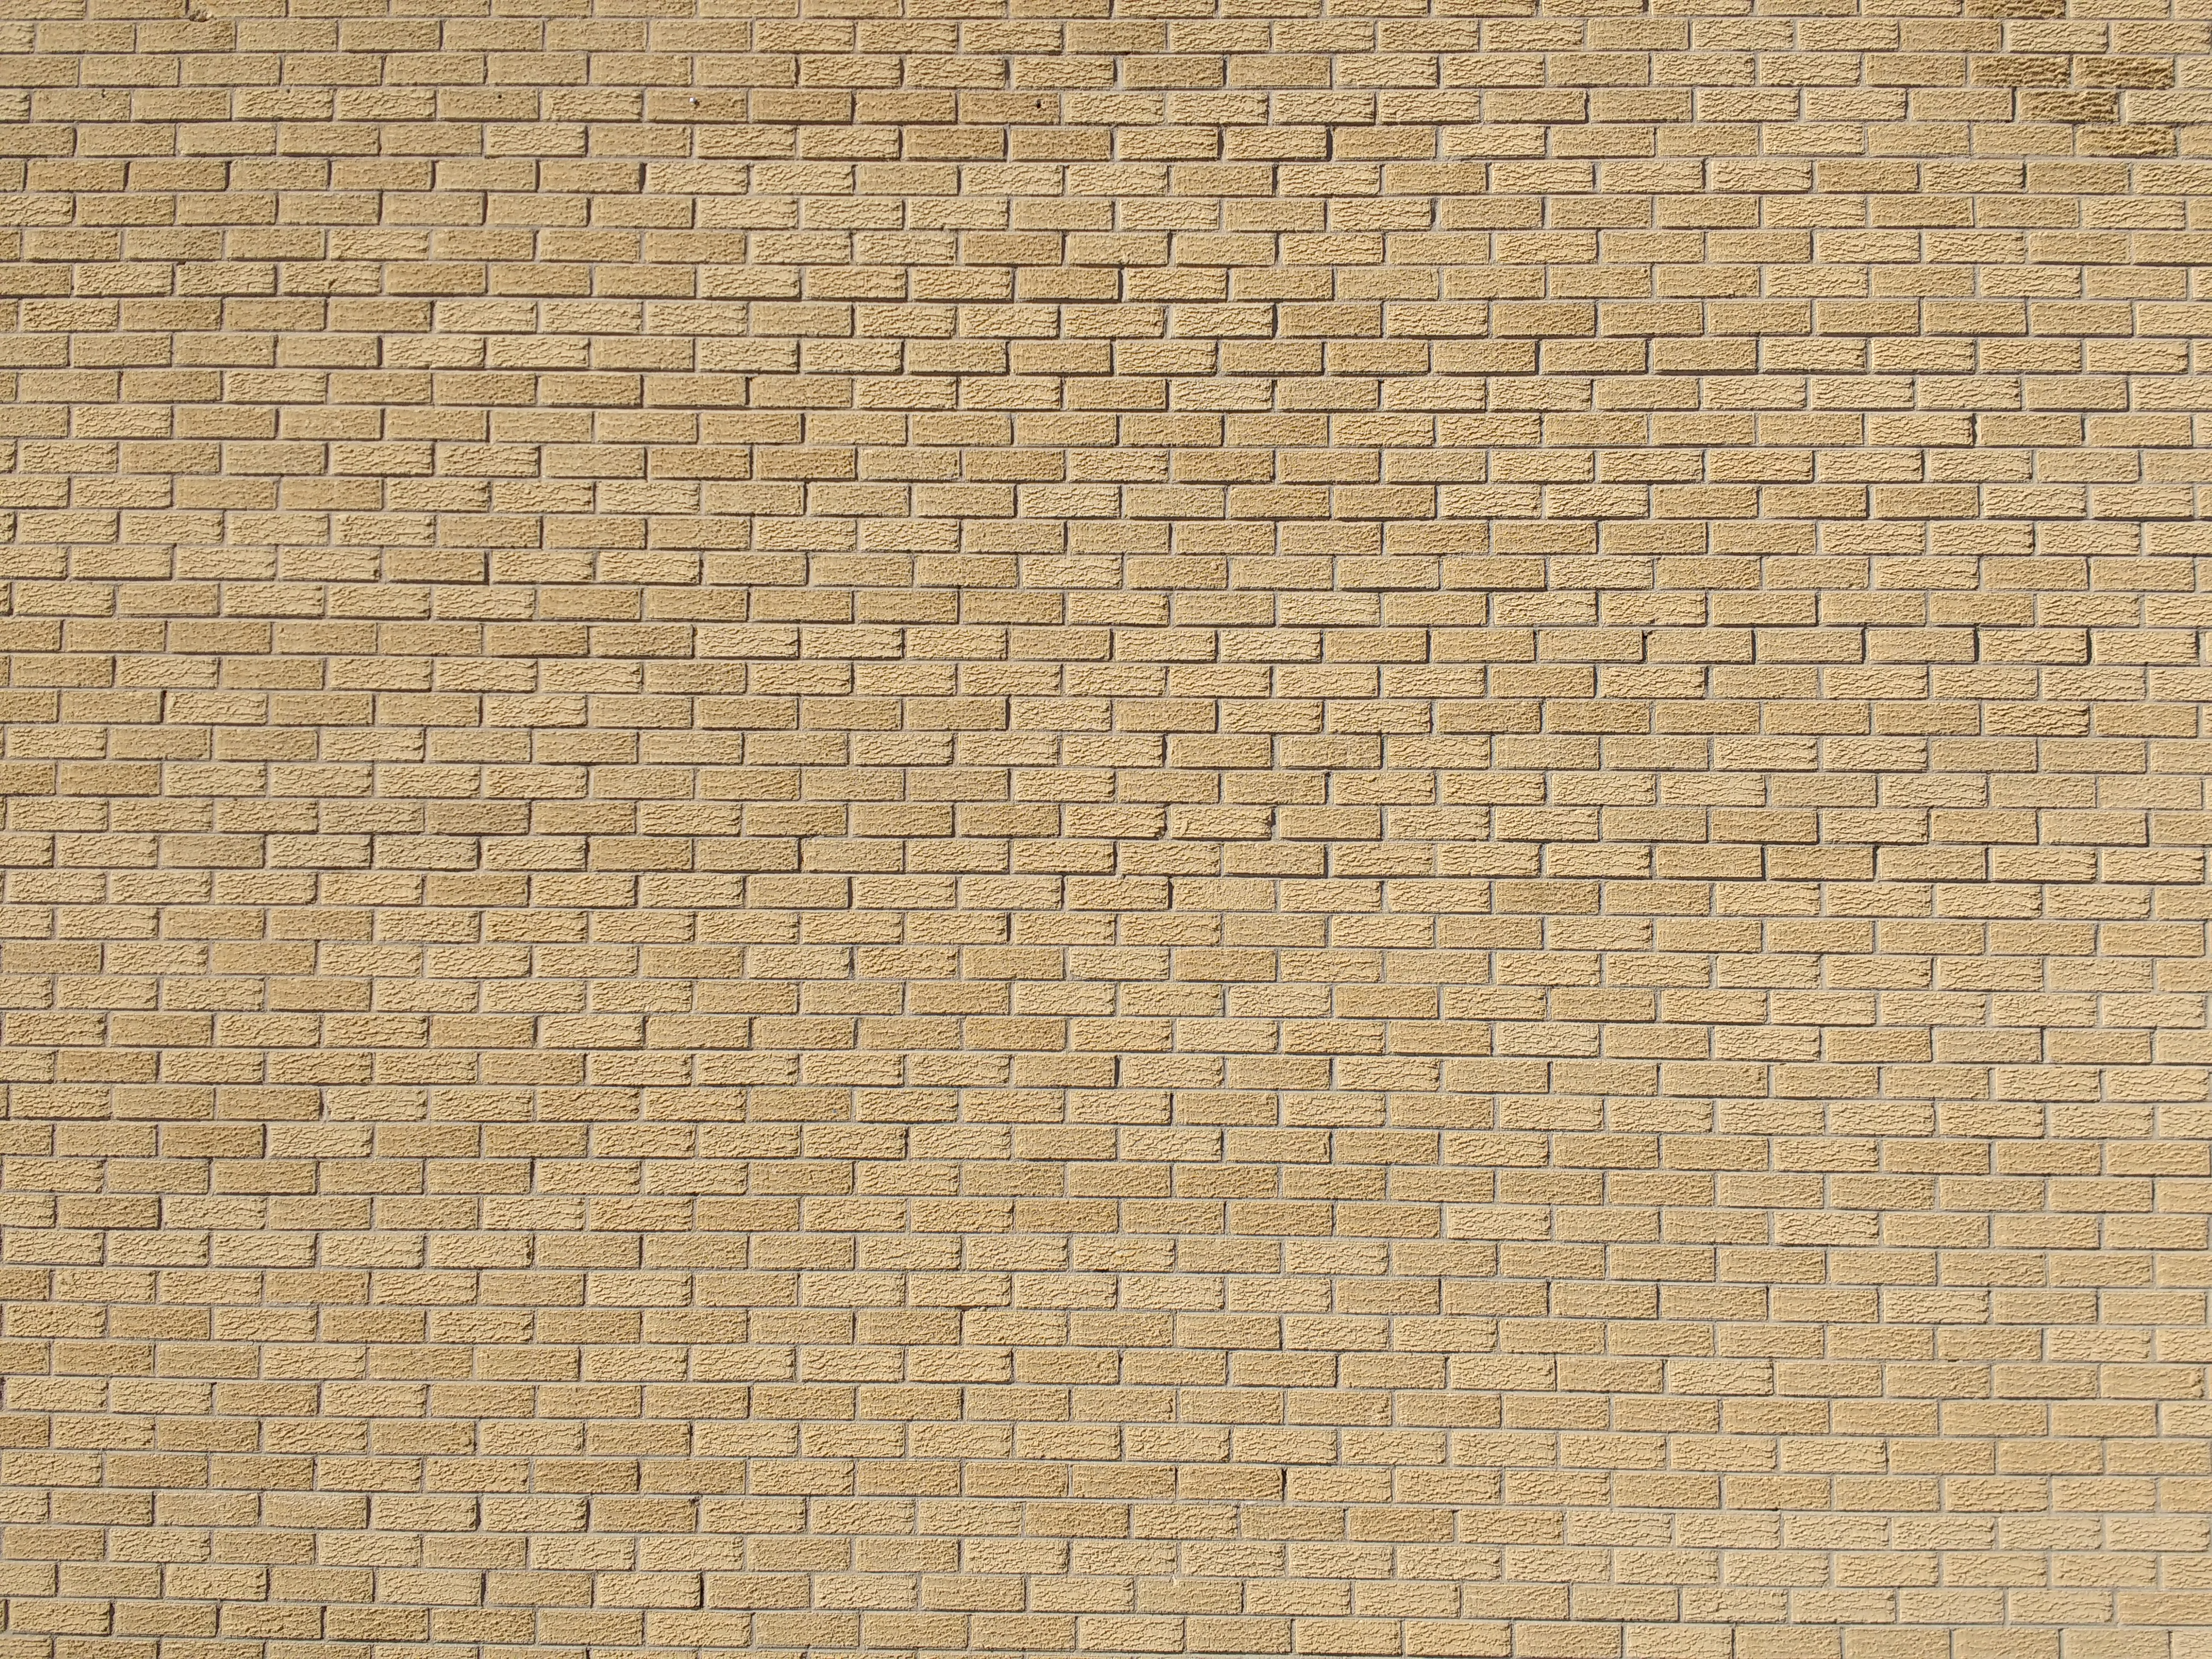 Blonde Brick Wall Texture Picture | Free Photograph | Photos Public ...